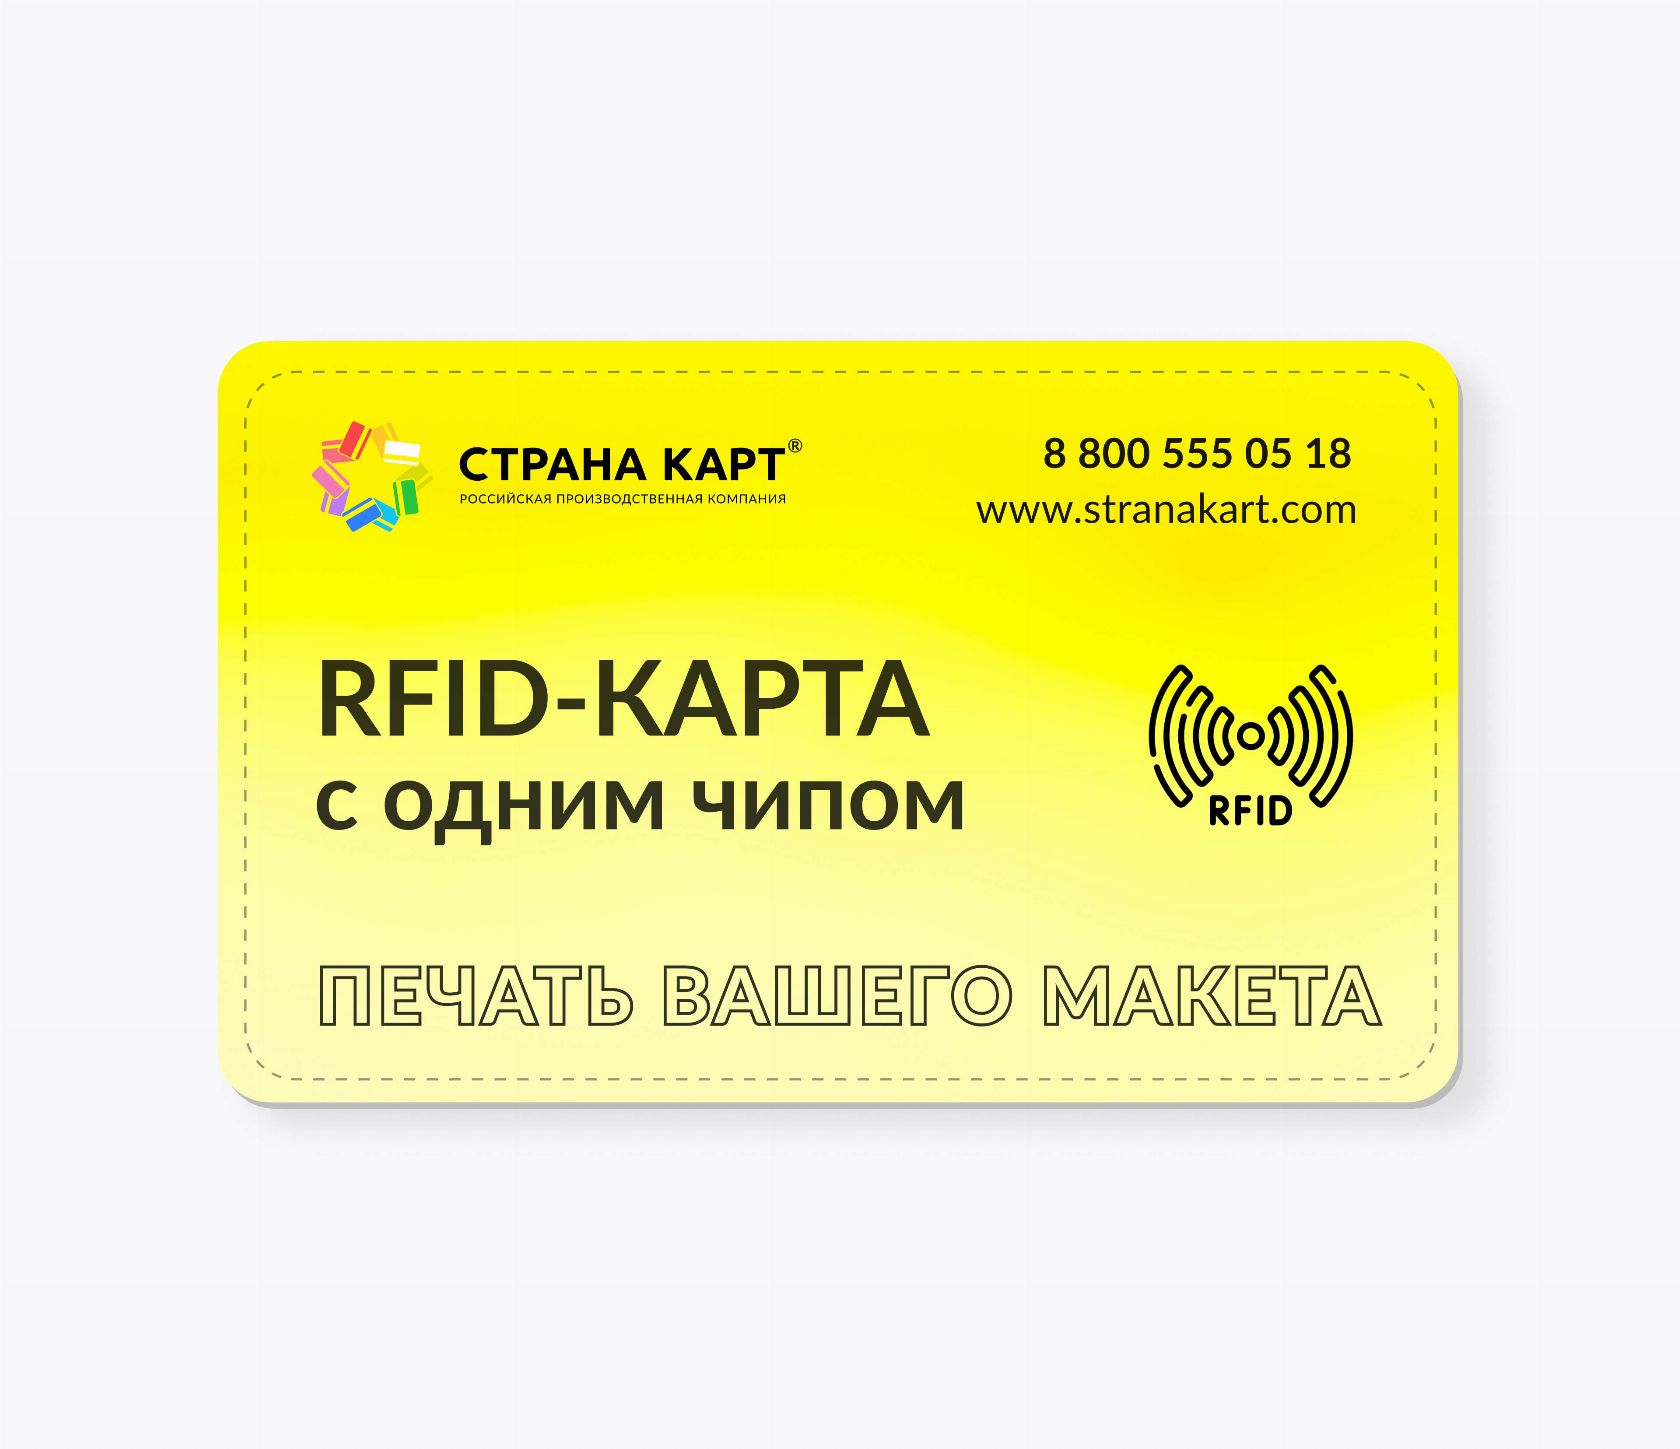 RFID-карты с чипом NXP MIFARE Classic 1k 4 byte nUID печать вашего макета RFID-карты с чипом NXP MIFARE Classic 1k 4 byte nUID